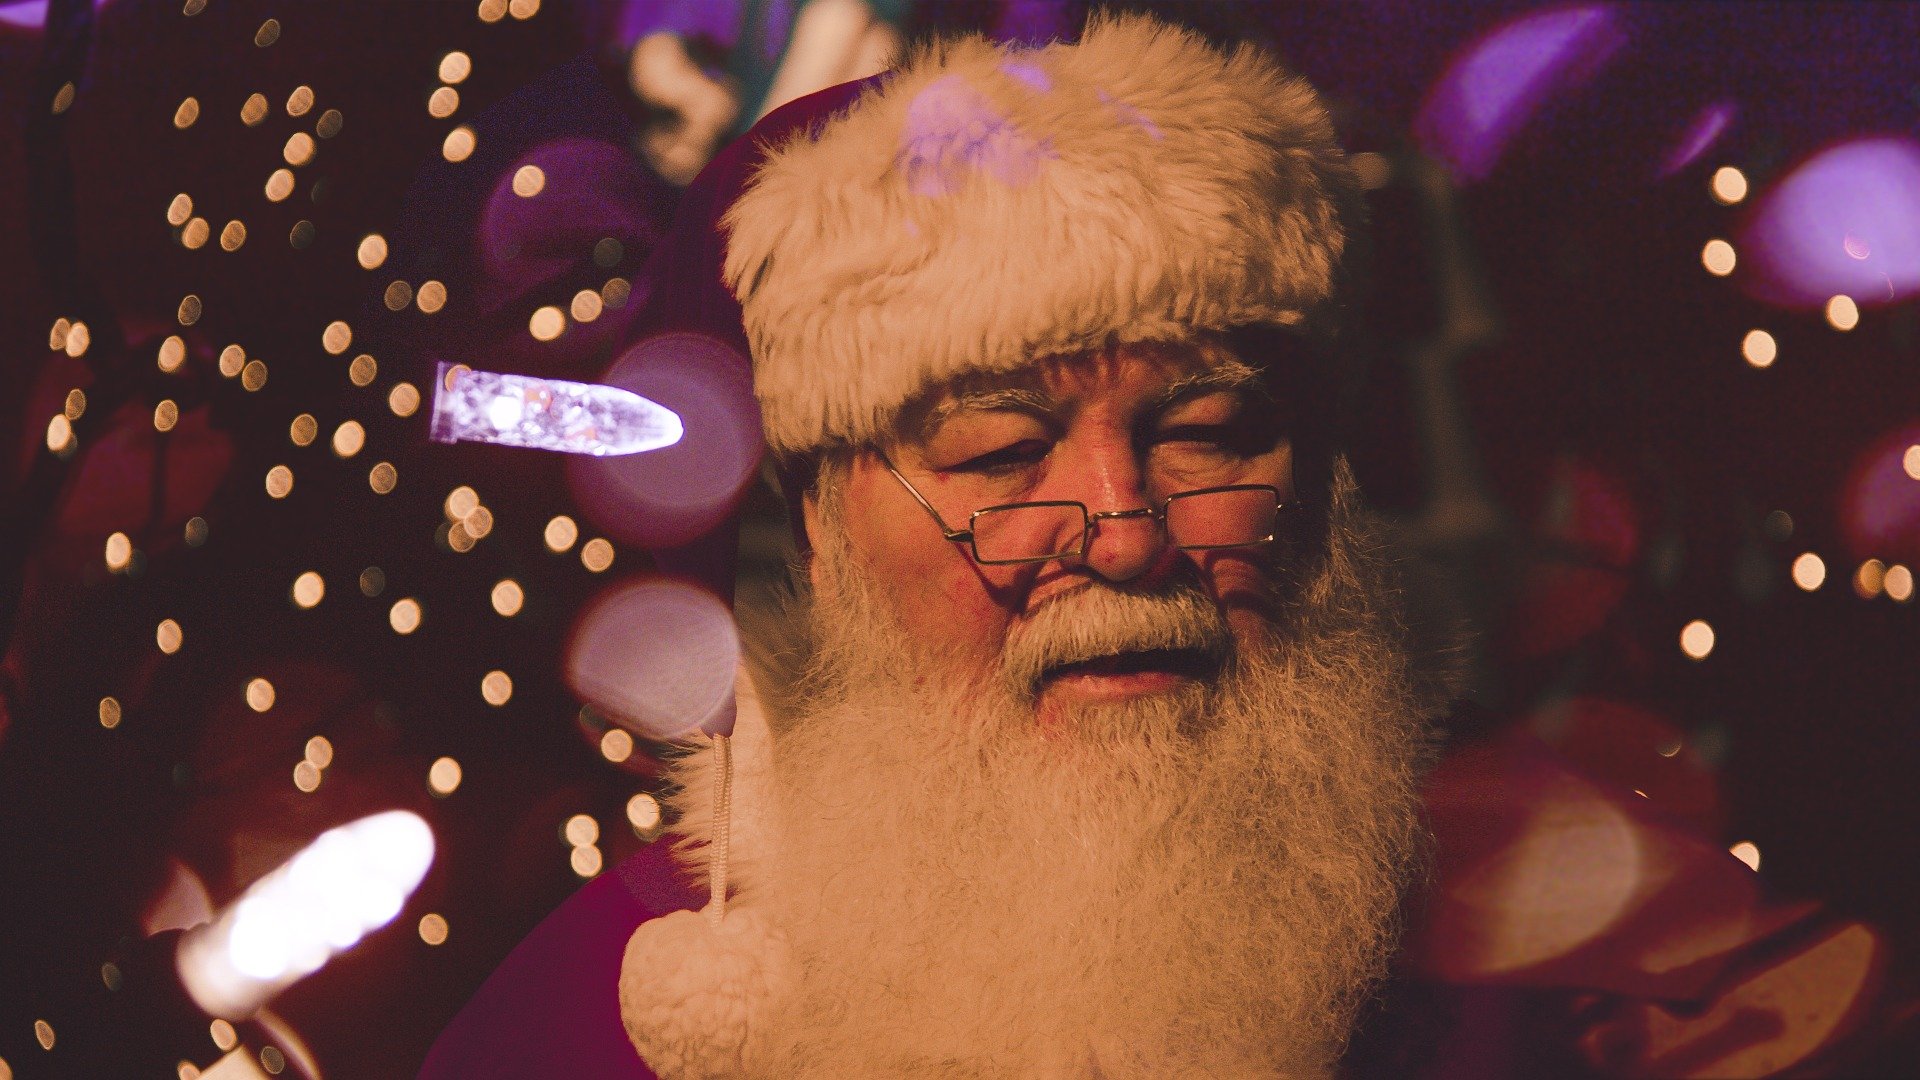 Does Santa Give Gift Cards